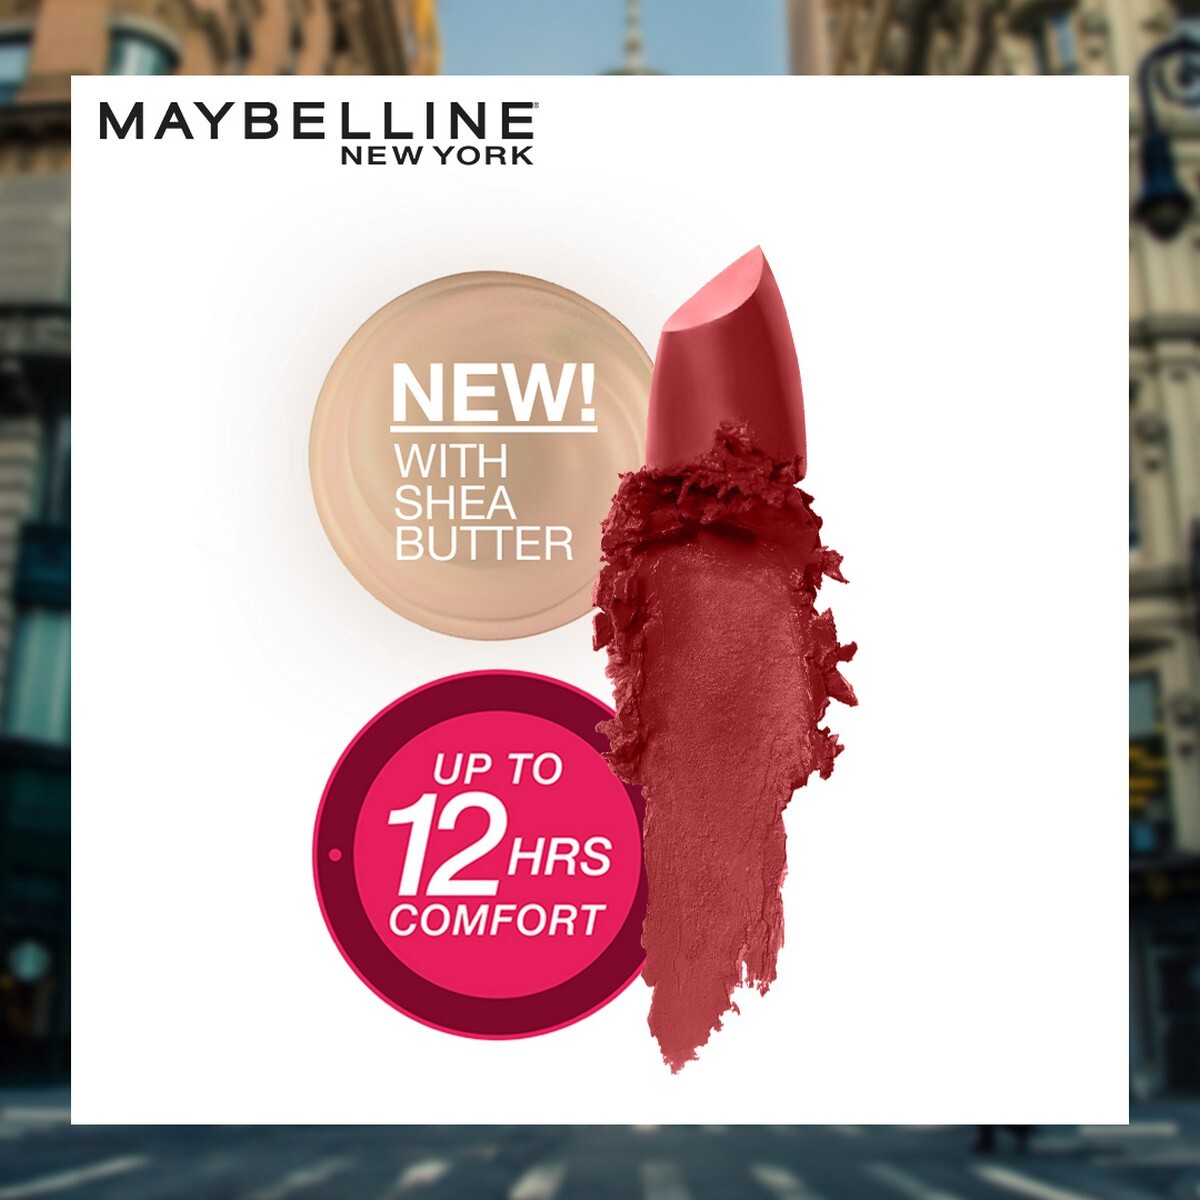 Maybelline New York Color Sensational Creamy Matte Lipstick, 807 Dried Rose, 3.9g